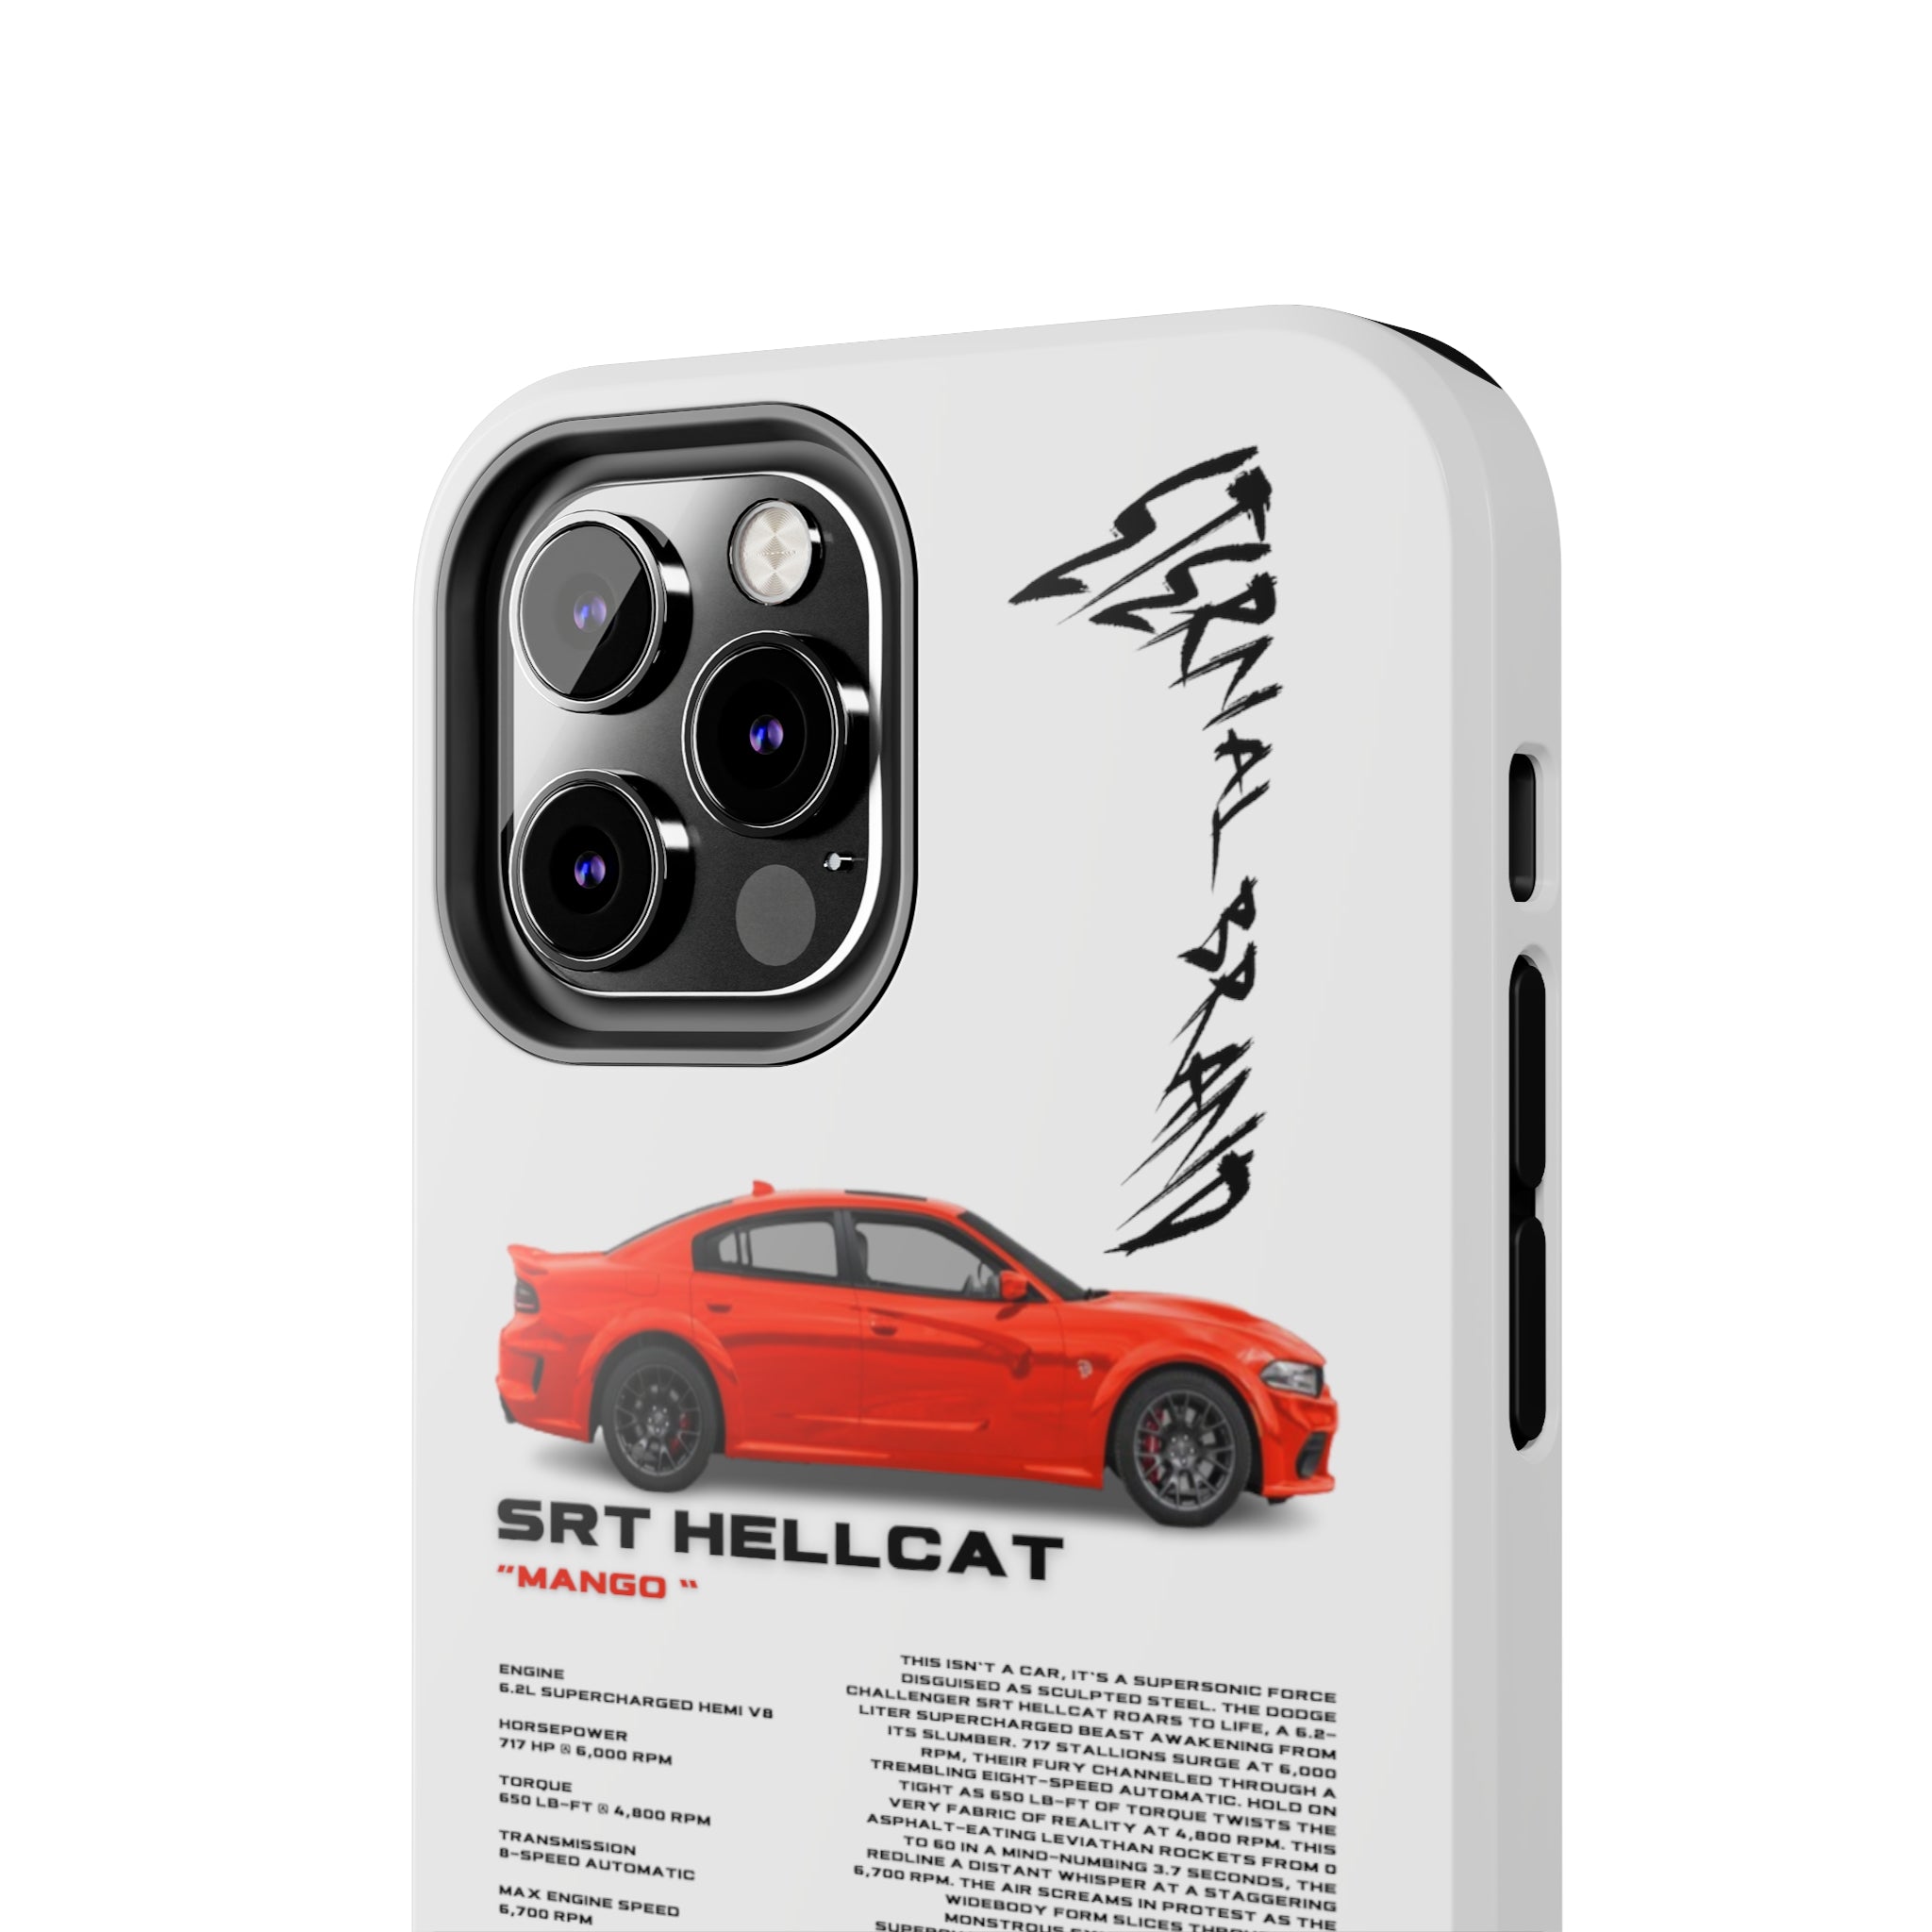 SRT Hellcat "Mango" "White"